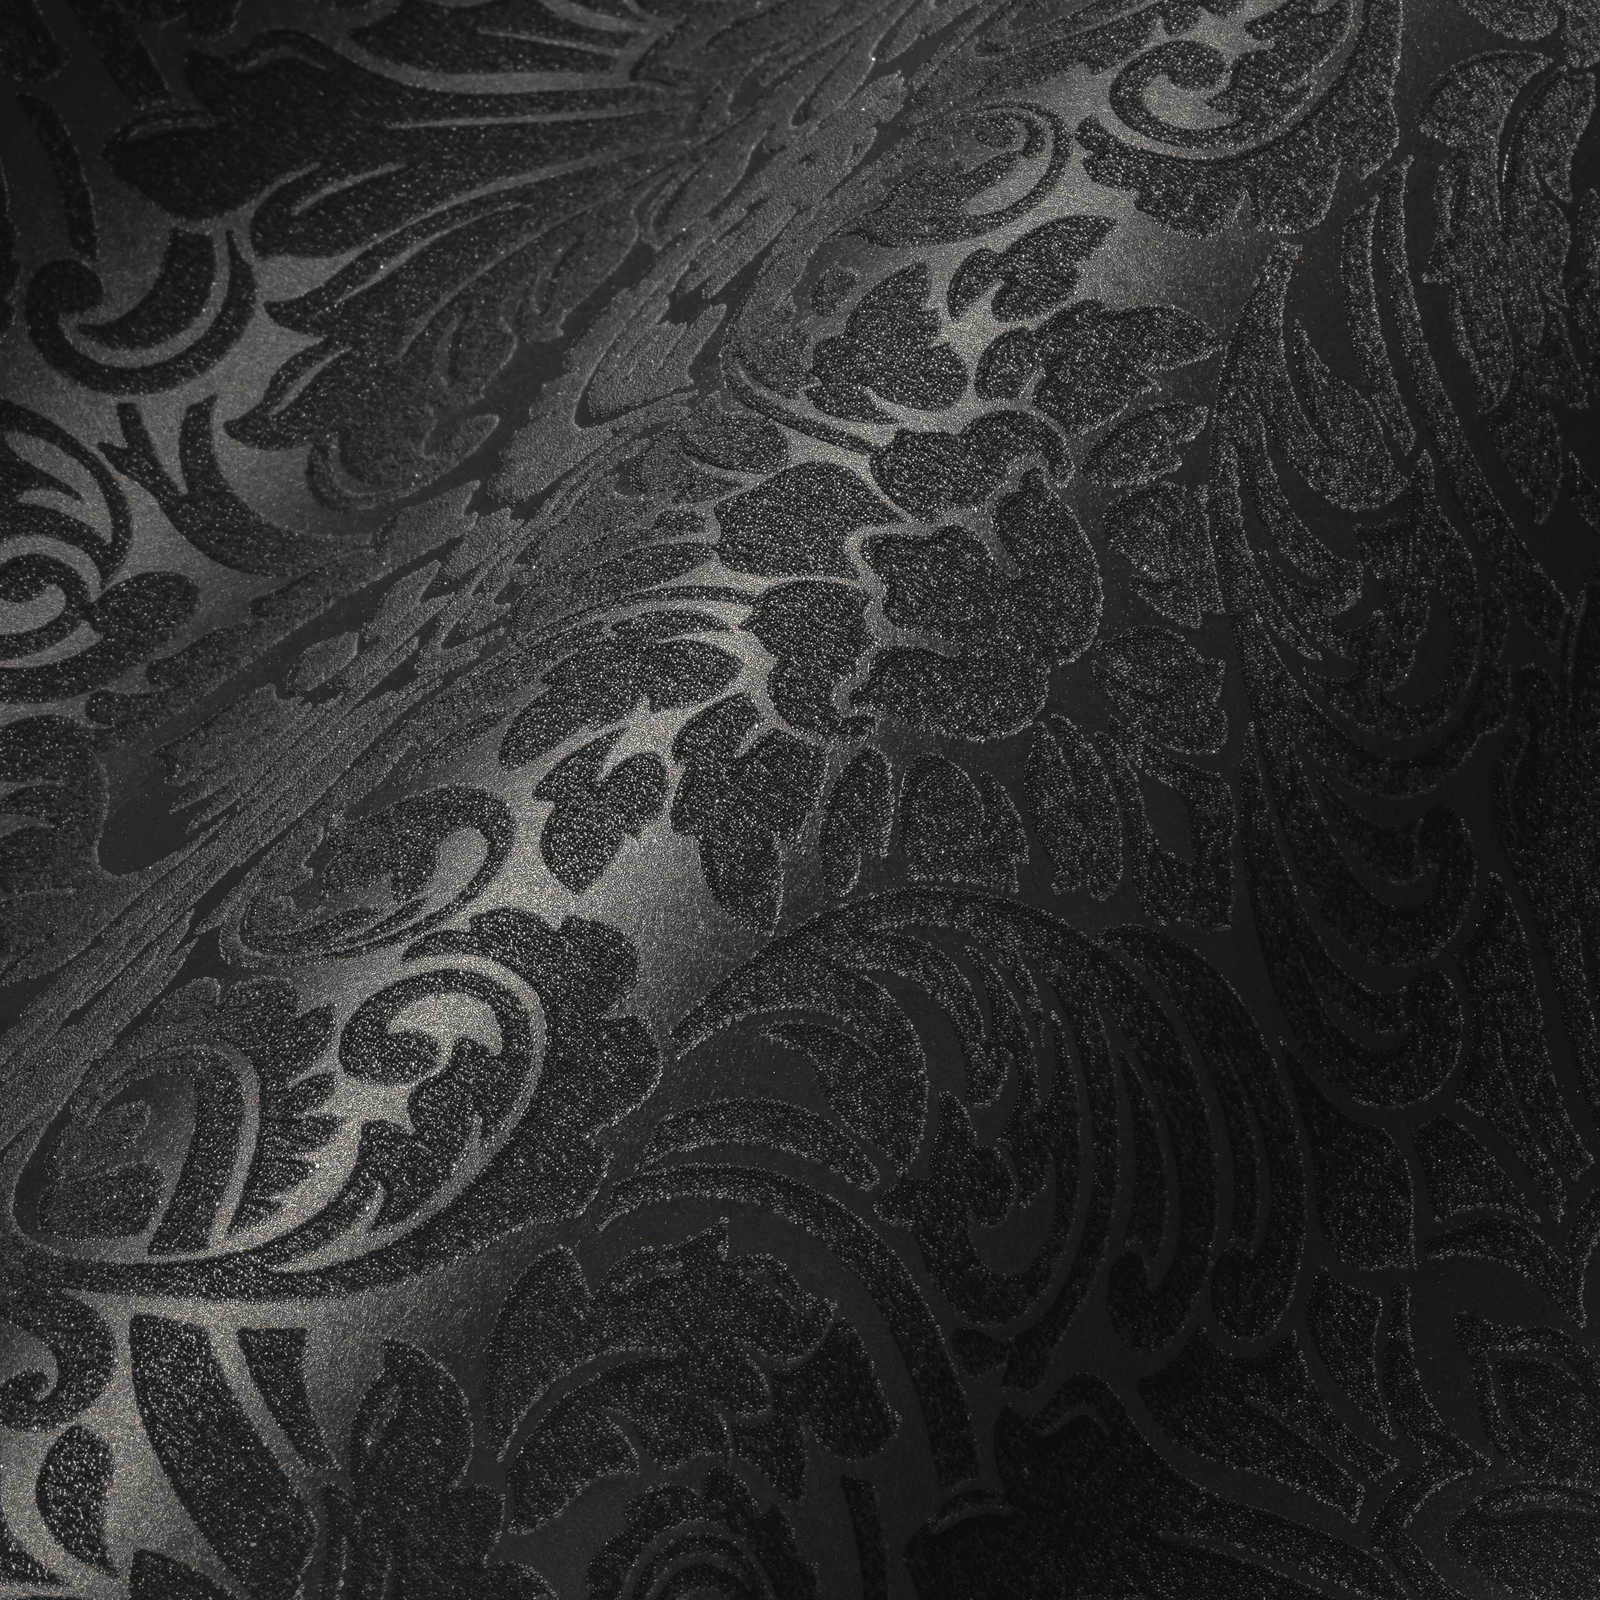             Ornament wallpaper metallic effect & floral design - silver, black
        